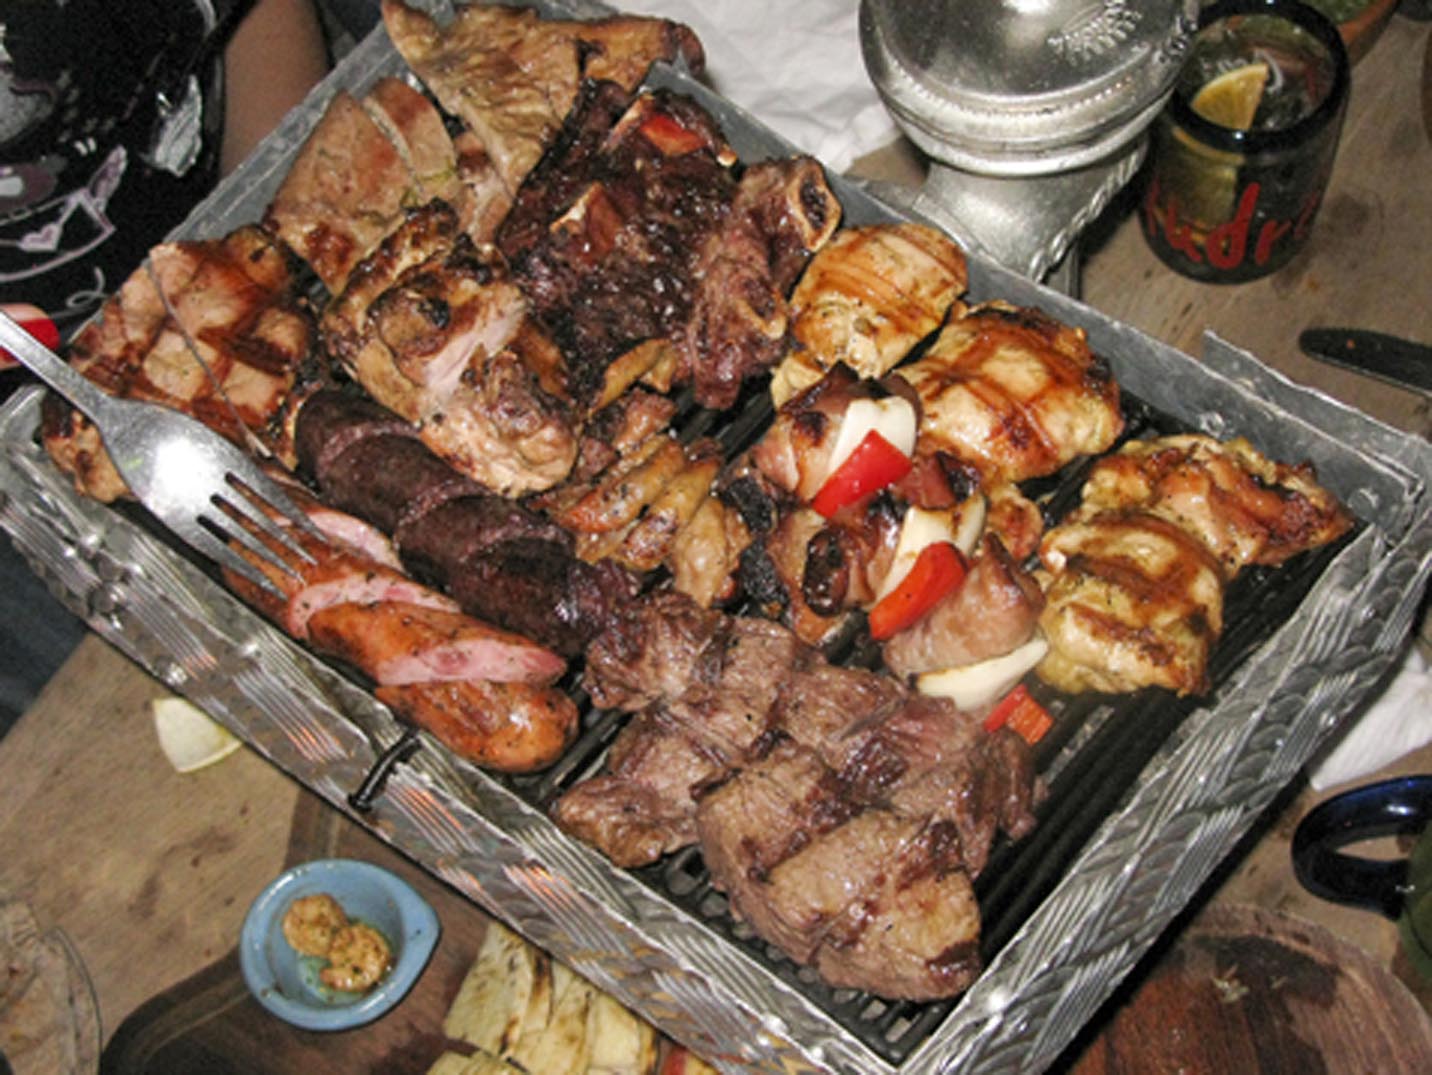 Parrillada (grilled meats, steak)